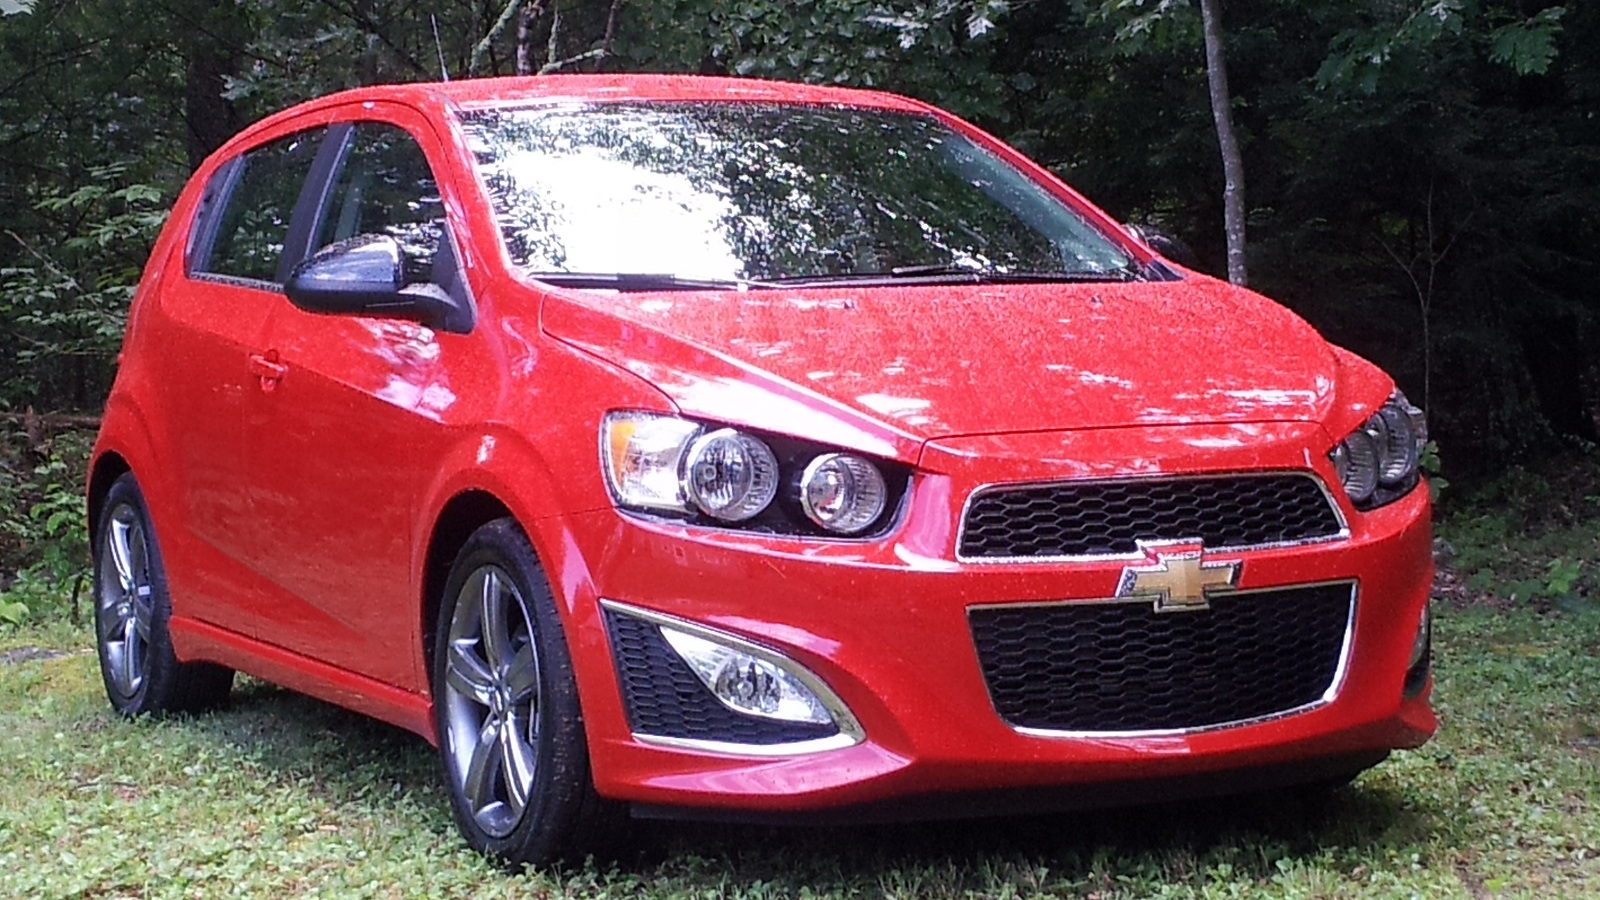 2013 Chevrolet Sonic RS, Catskill Mountains, NY, July 2013